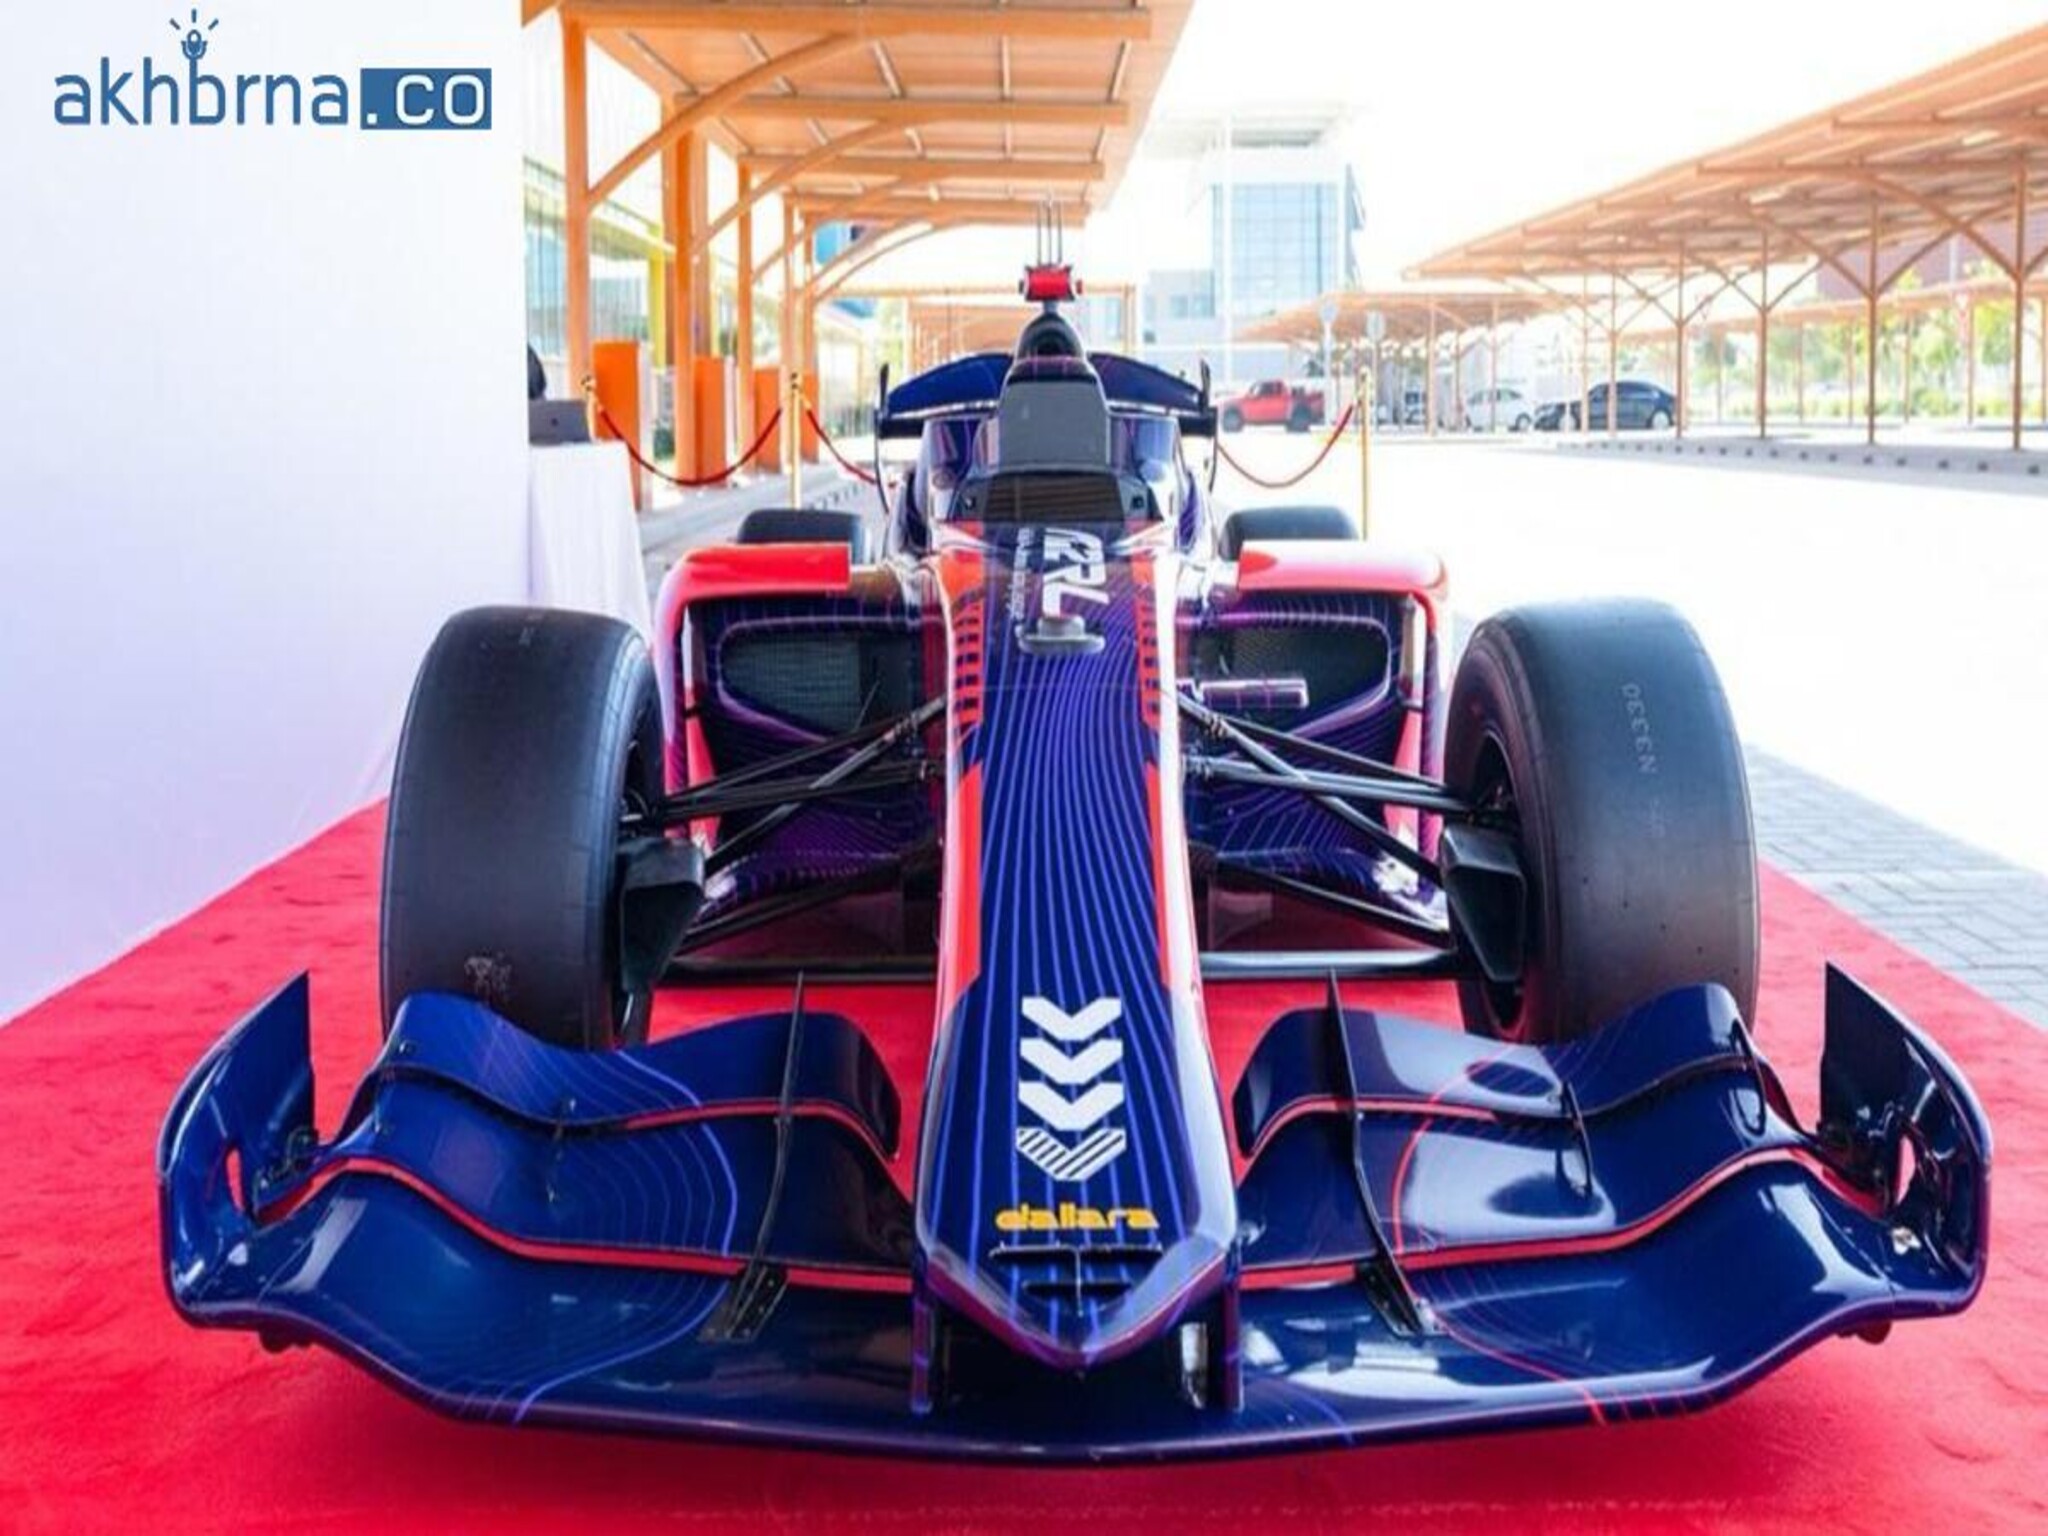 Abu Dhabi Yas Marina hosts 300kmph driverless car race with $2.25M prize